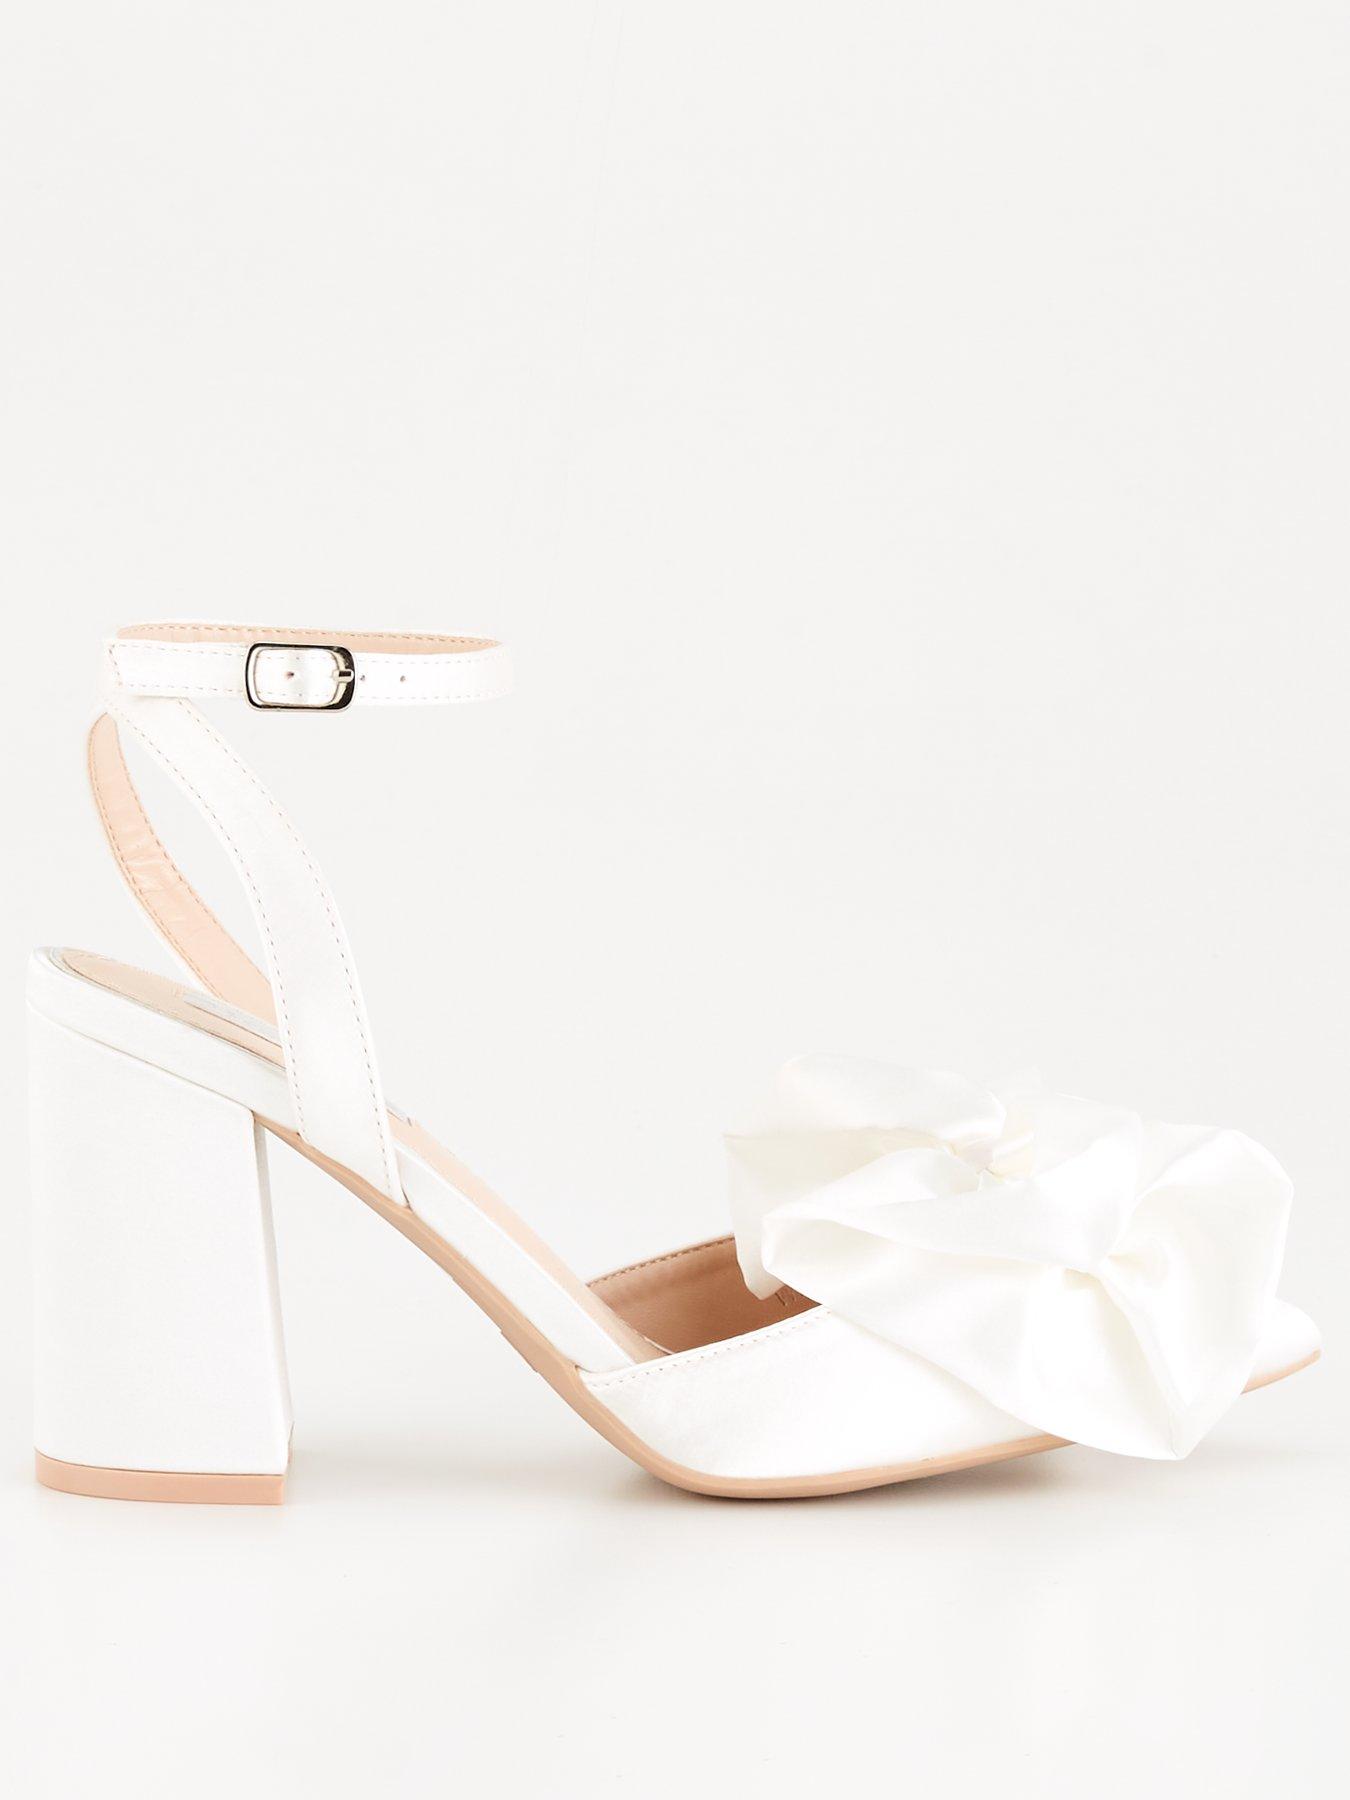 Ivory Block Heel Wedding Shoes with Asymmetrical Bow - Zoya